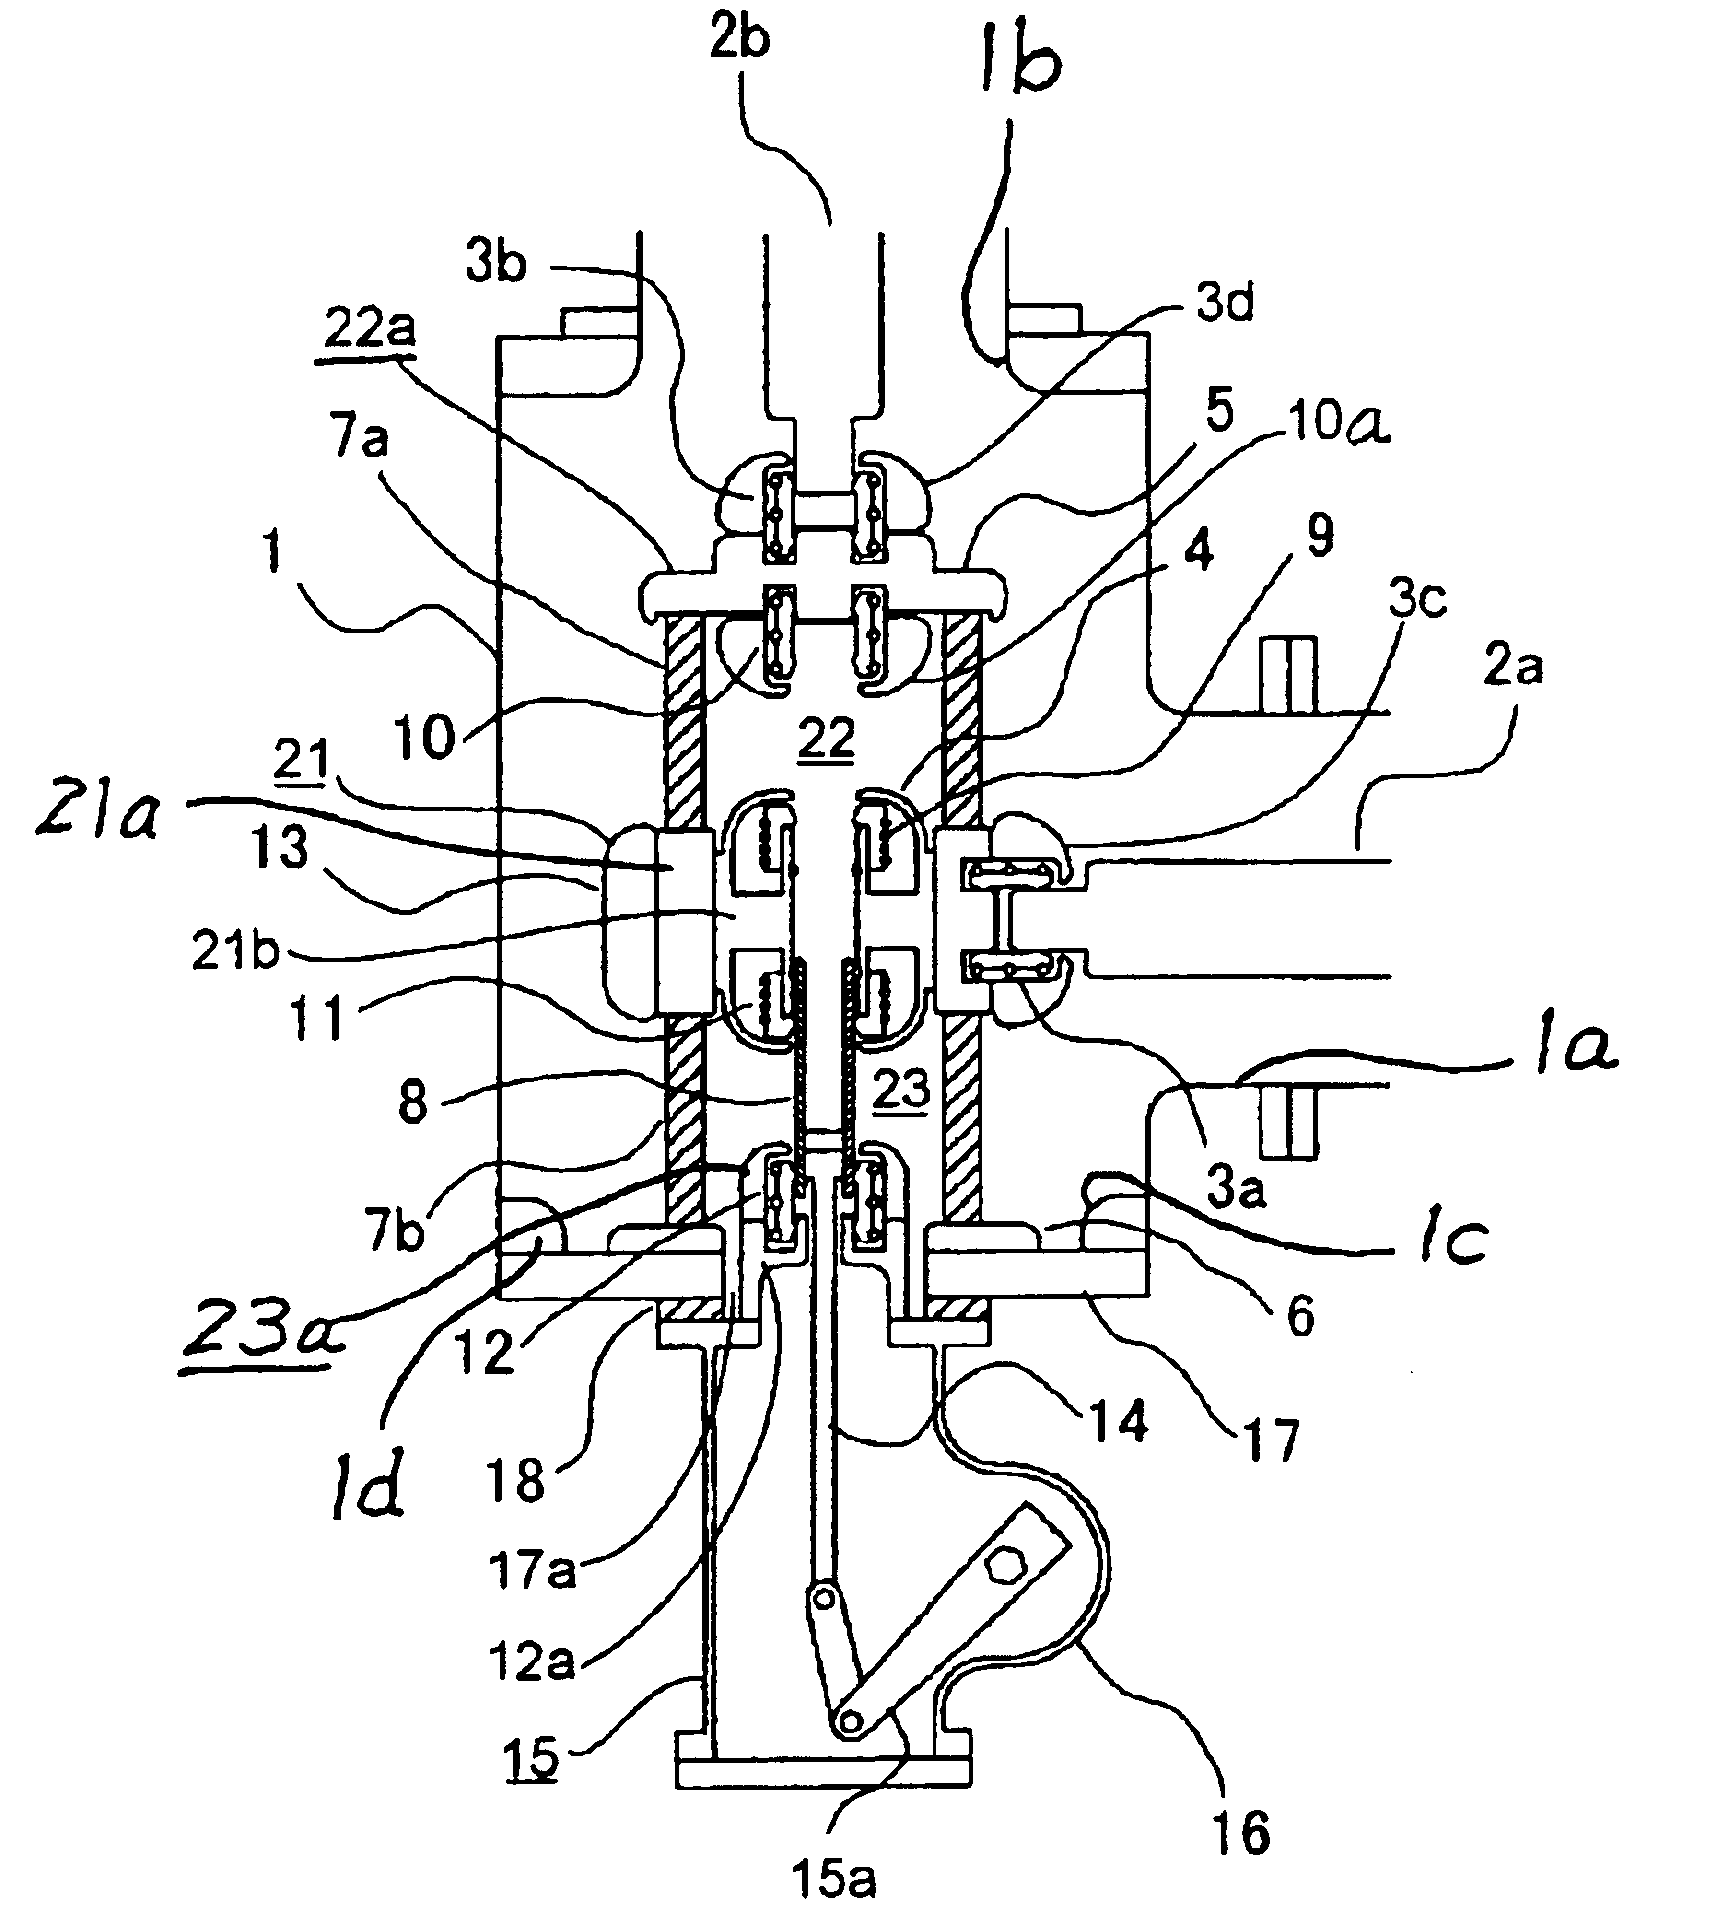 Gas-insulated switchgear